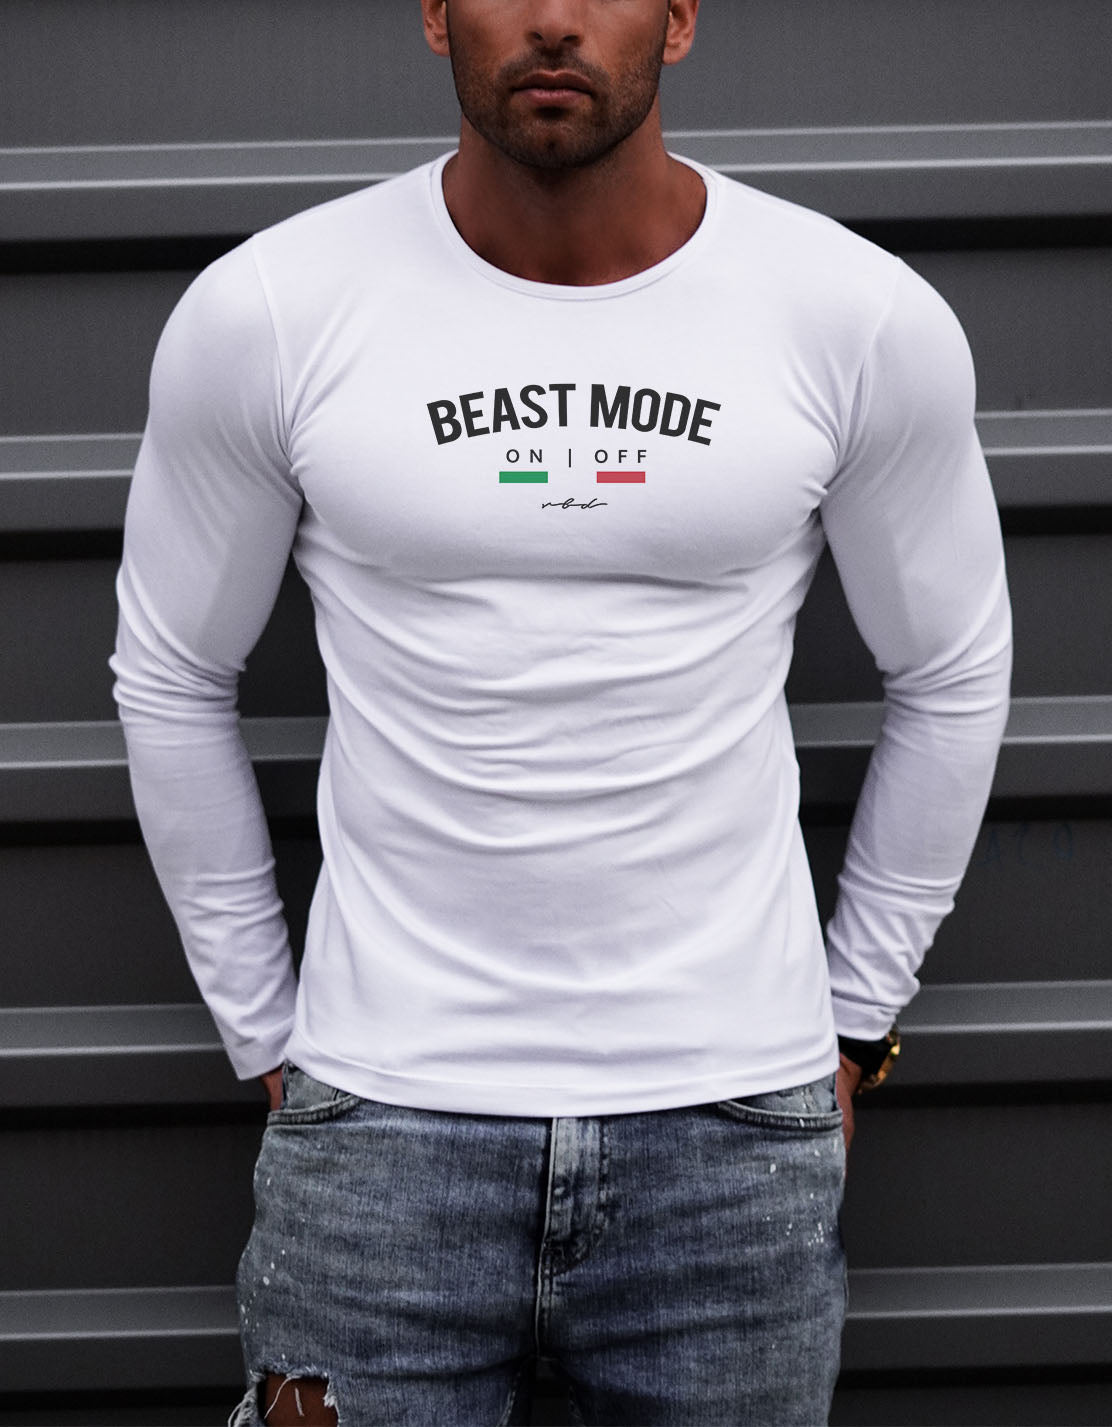 Mens Long Sleeve T-shirt "BEAST MODE ON" MD930